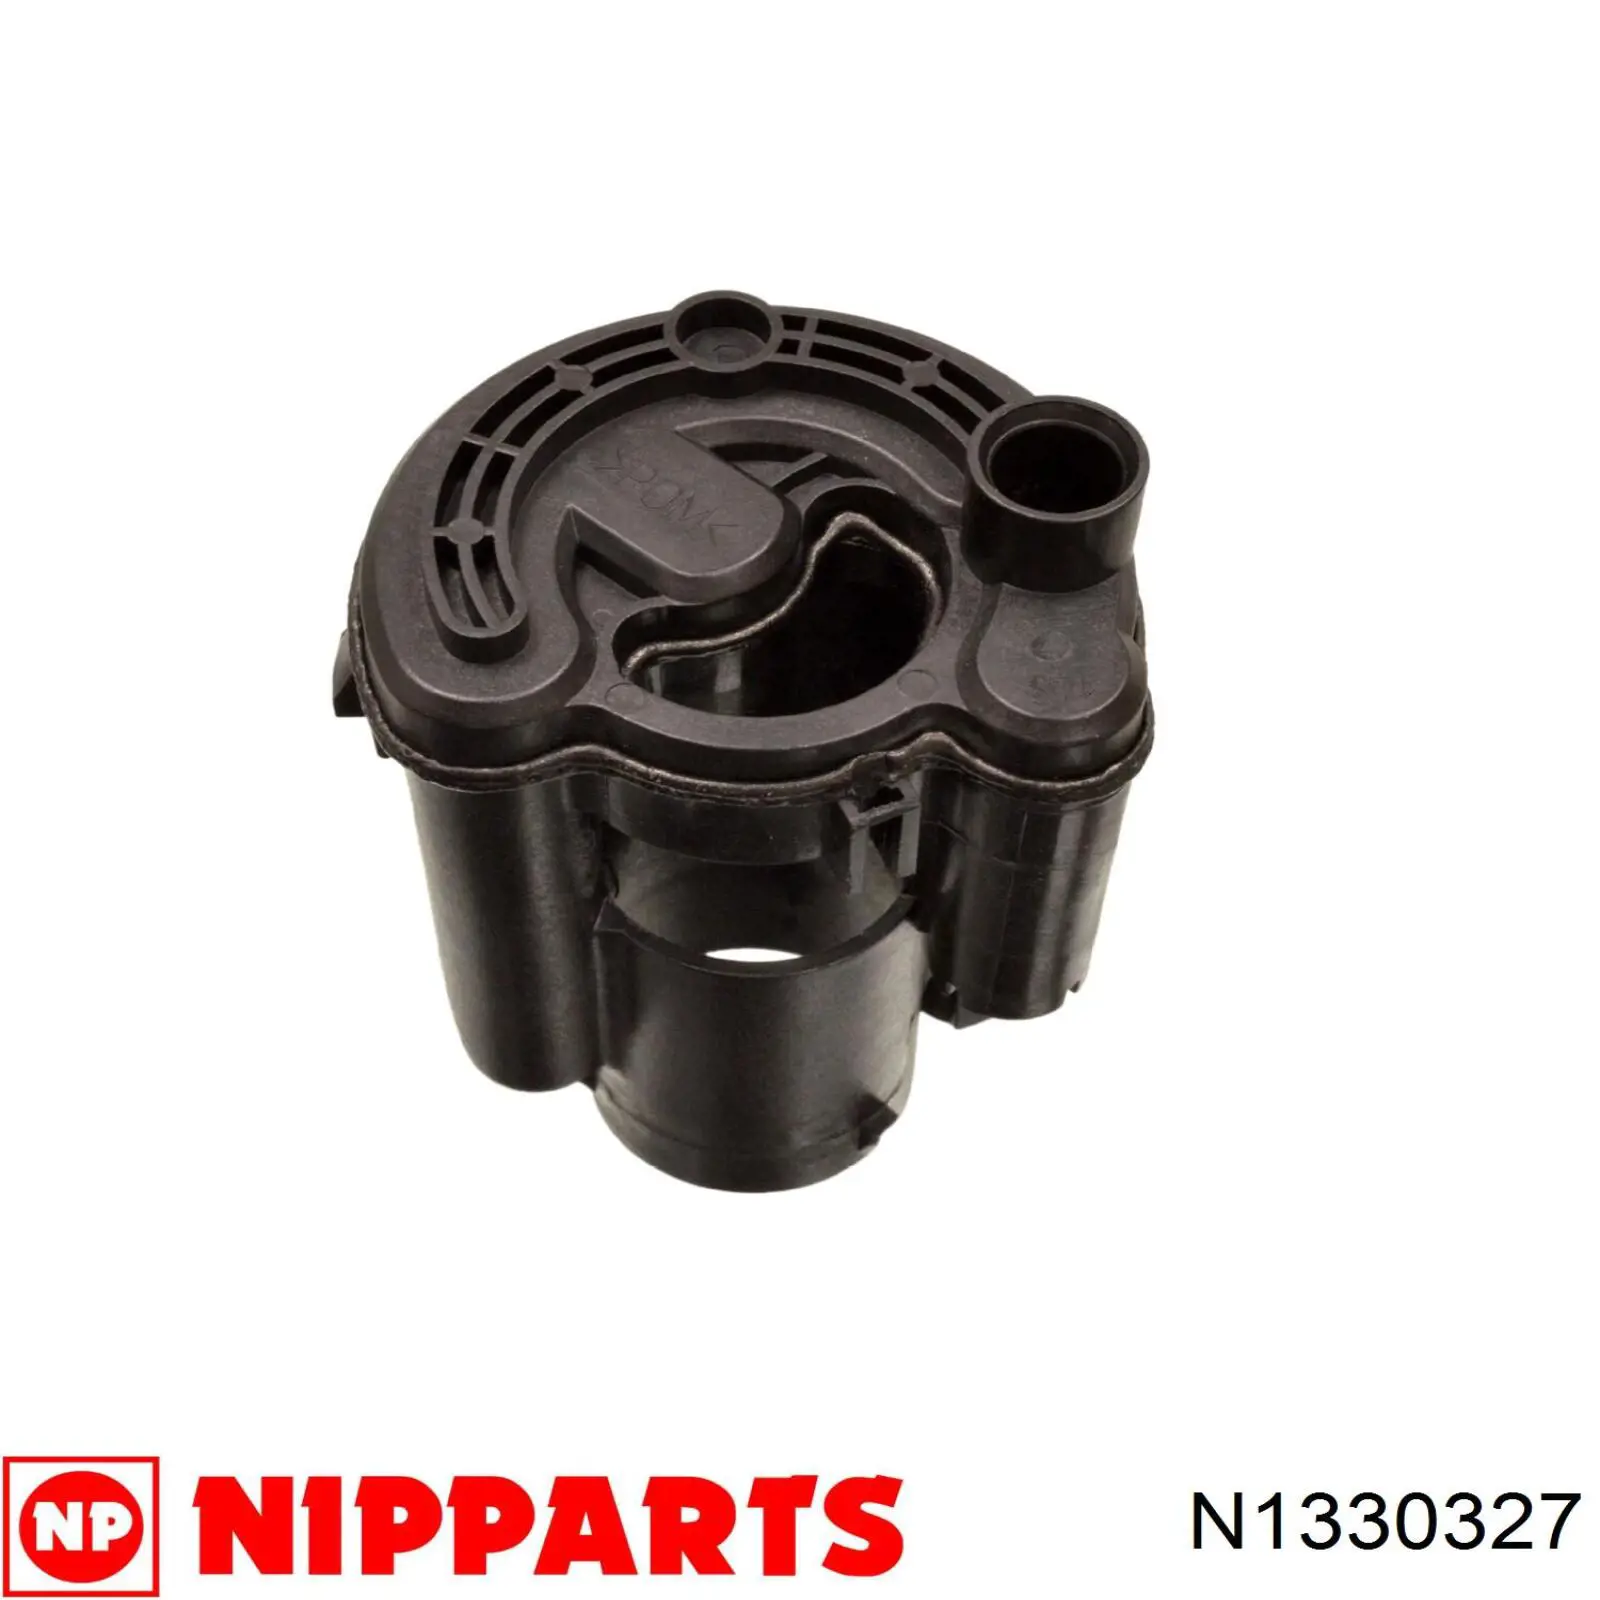 Filtro combustible N1330327 Nipparts